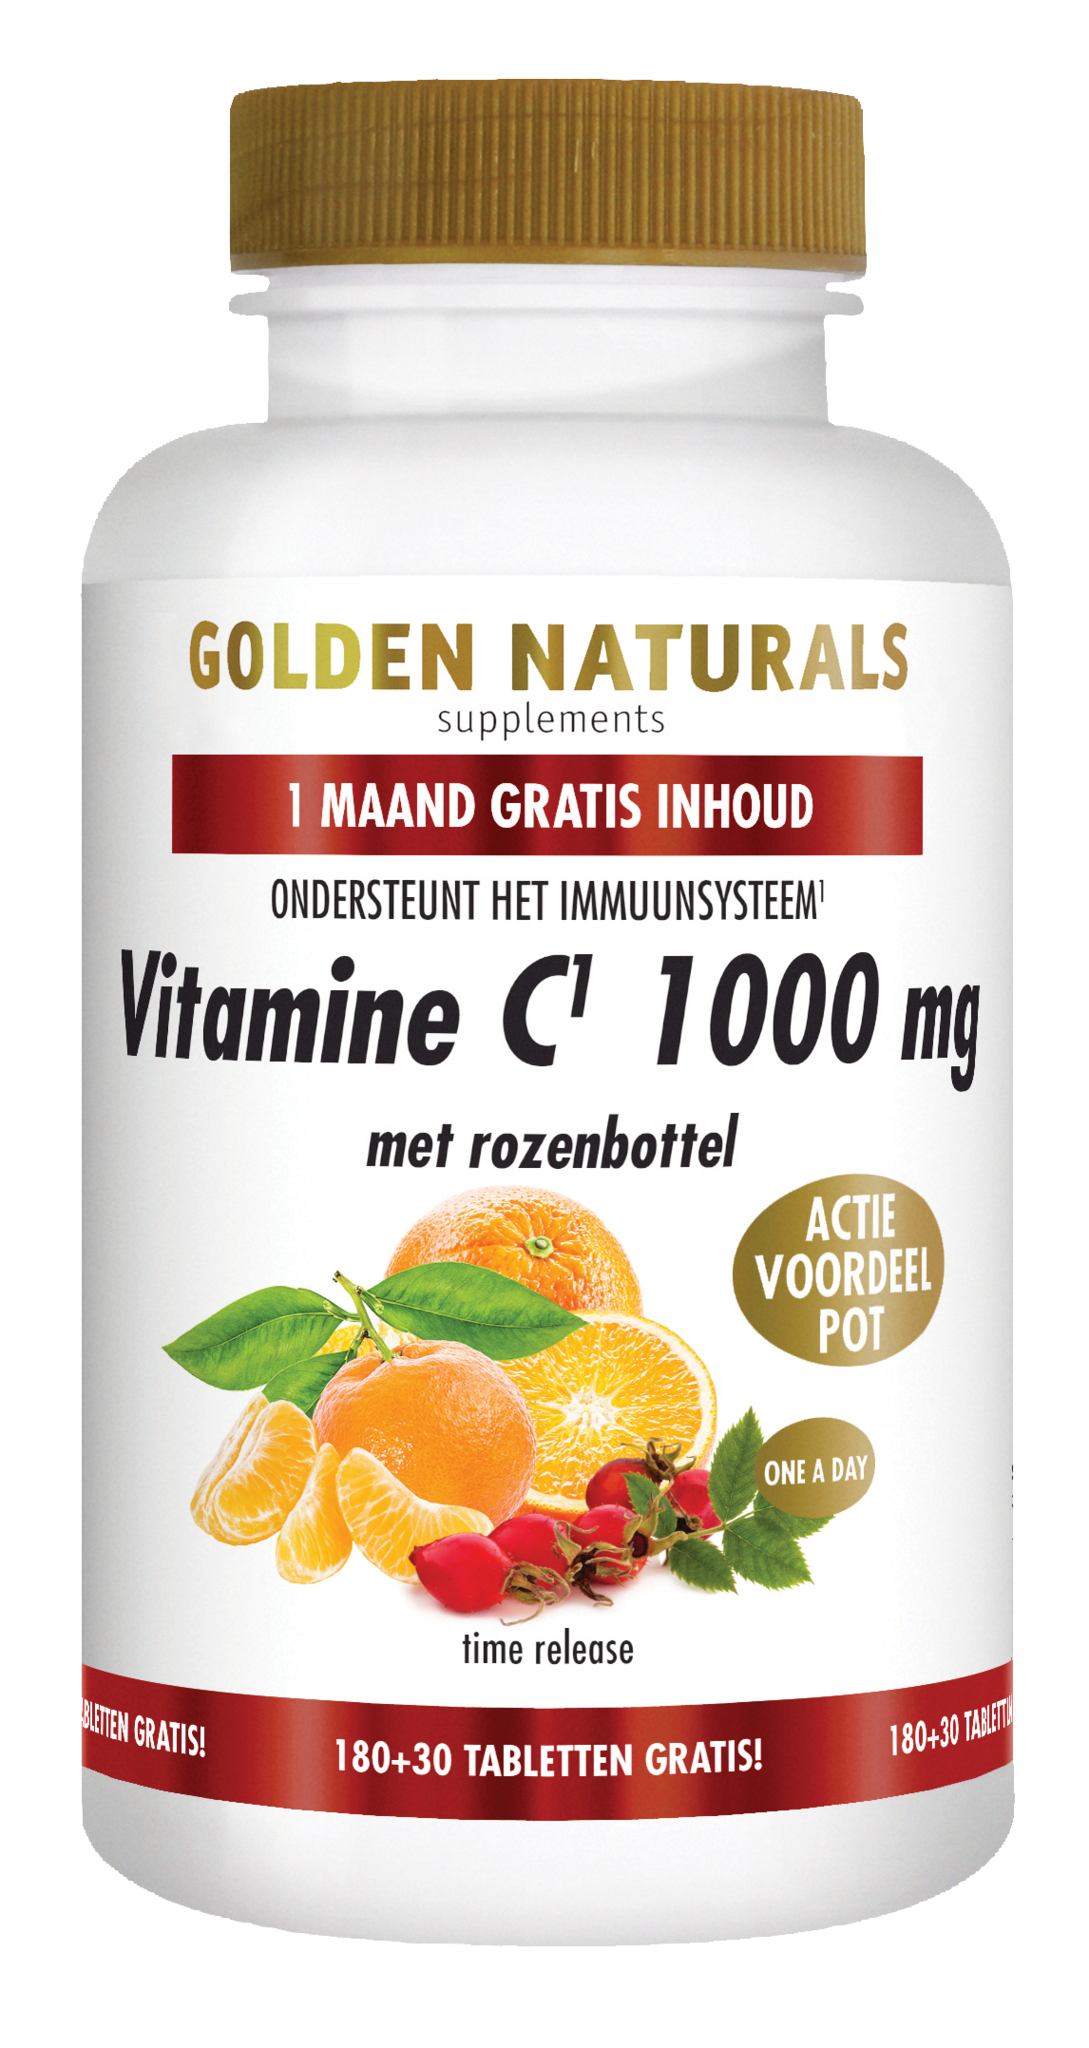 Golden Naturals Vitamine C 1000 mg met rozenbottel